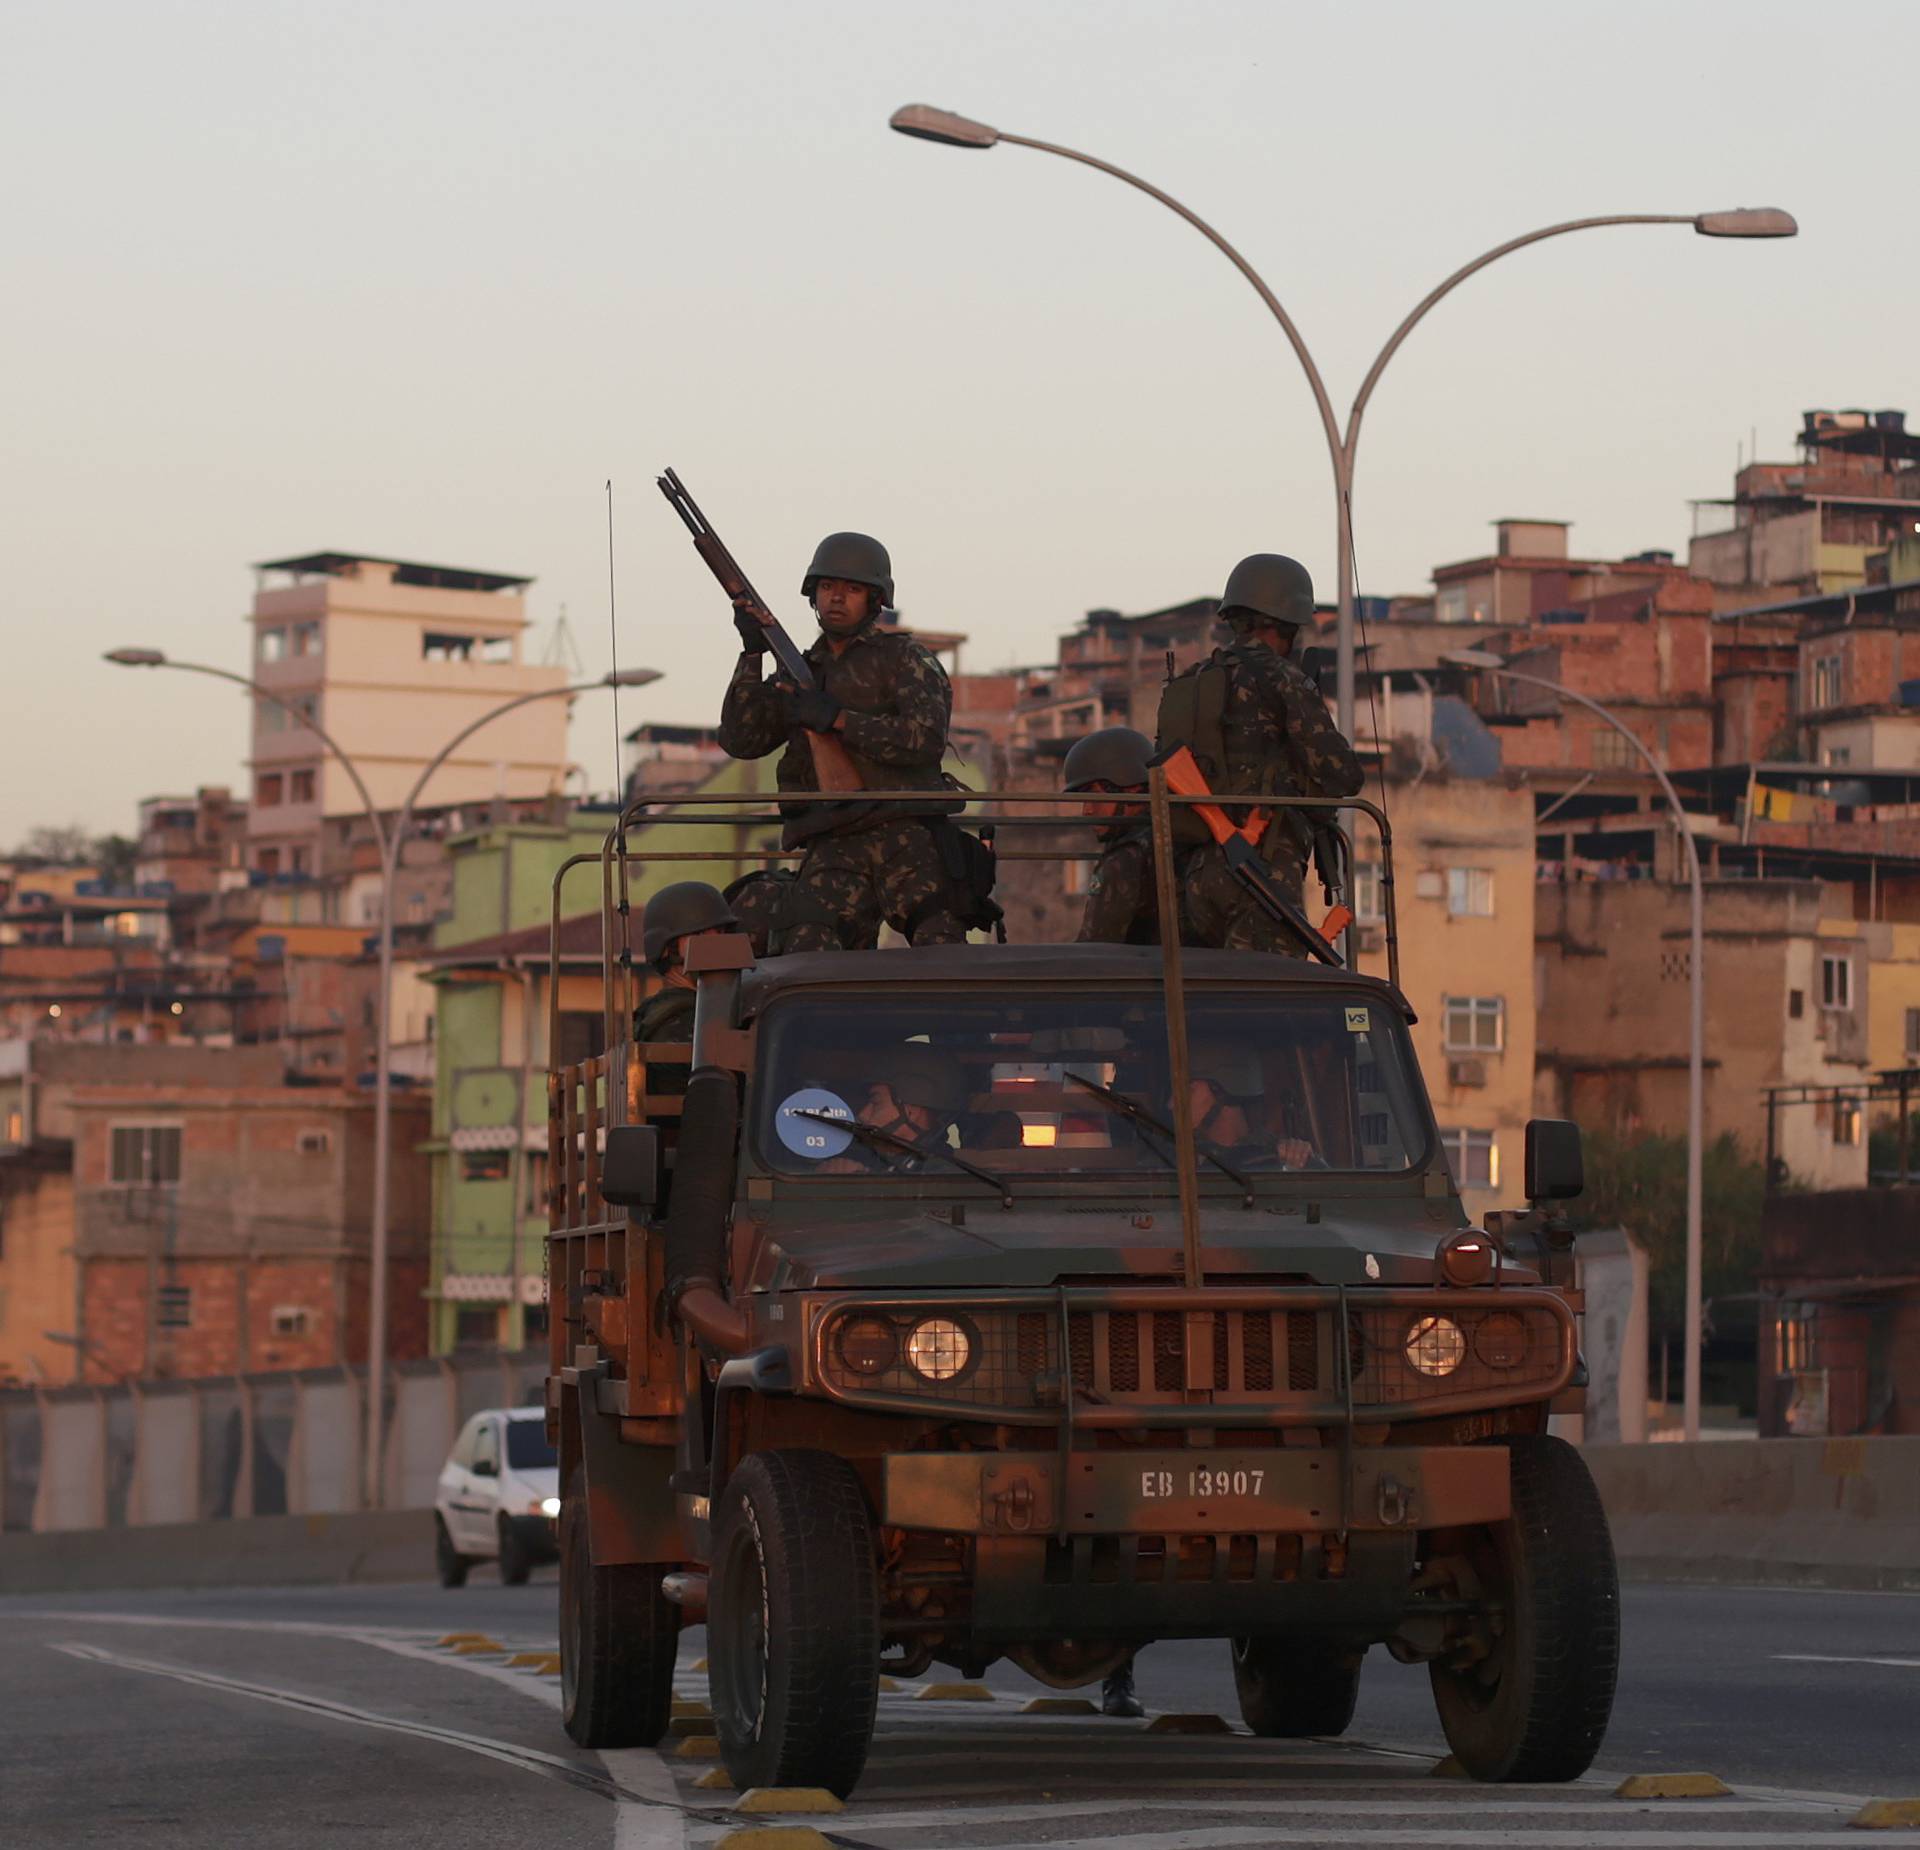 Brazilian soldiers patrol near the Complexo do Mare favela in Rio de Janeiro